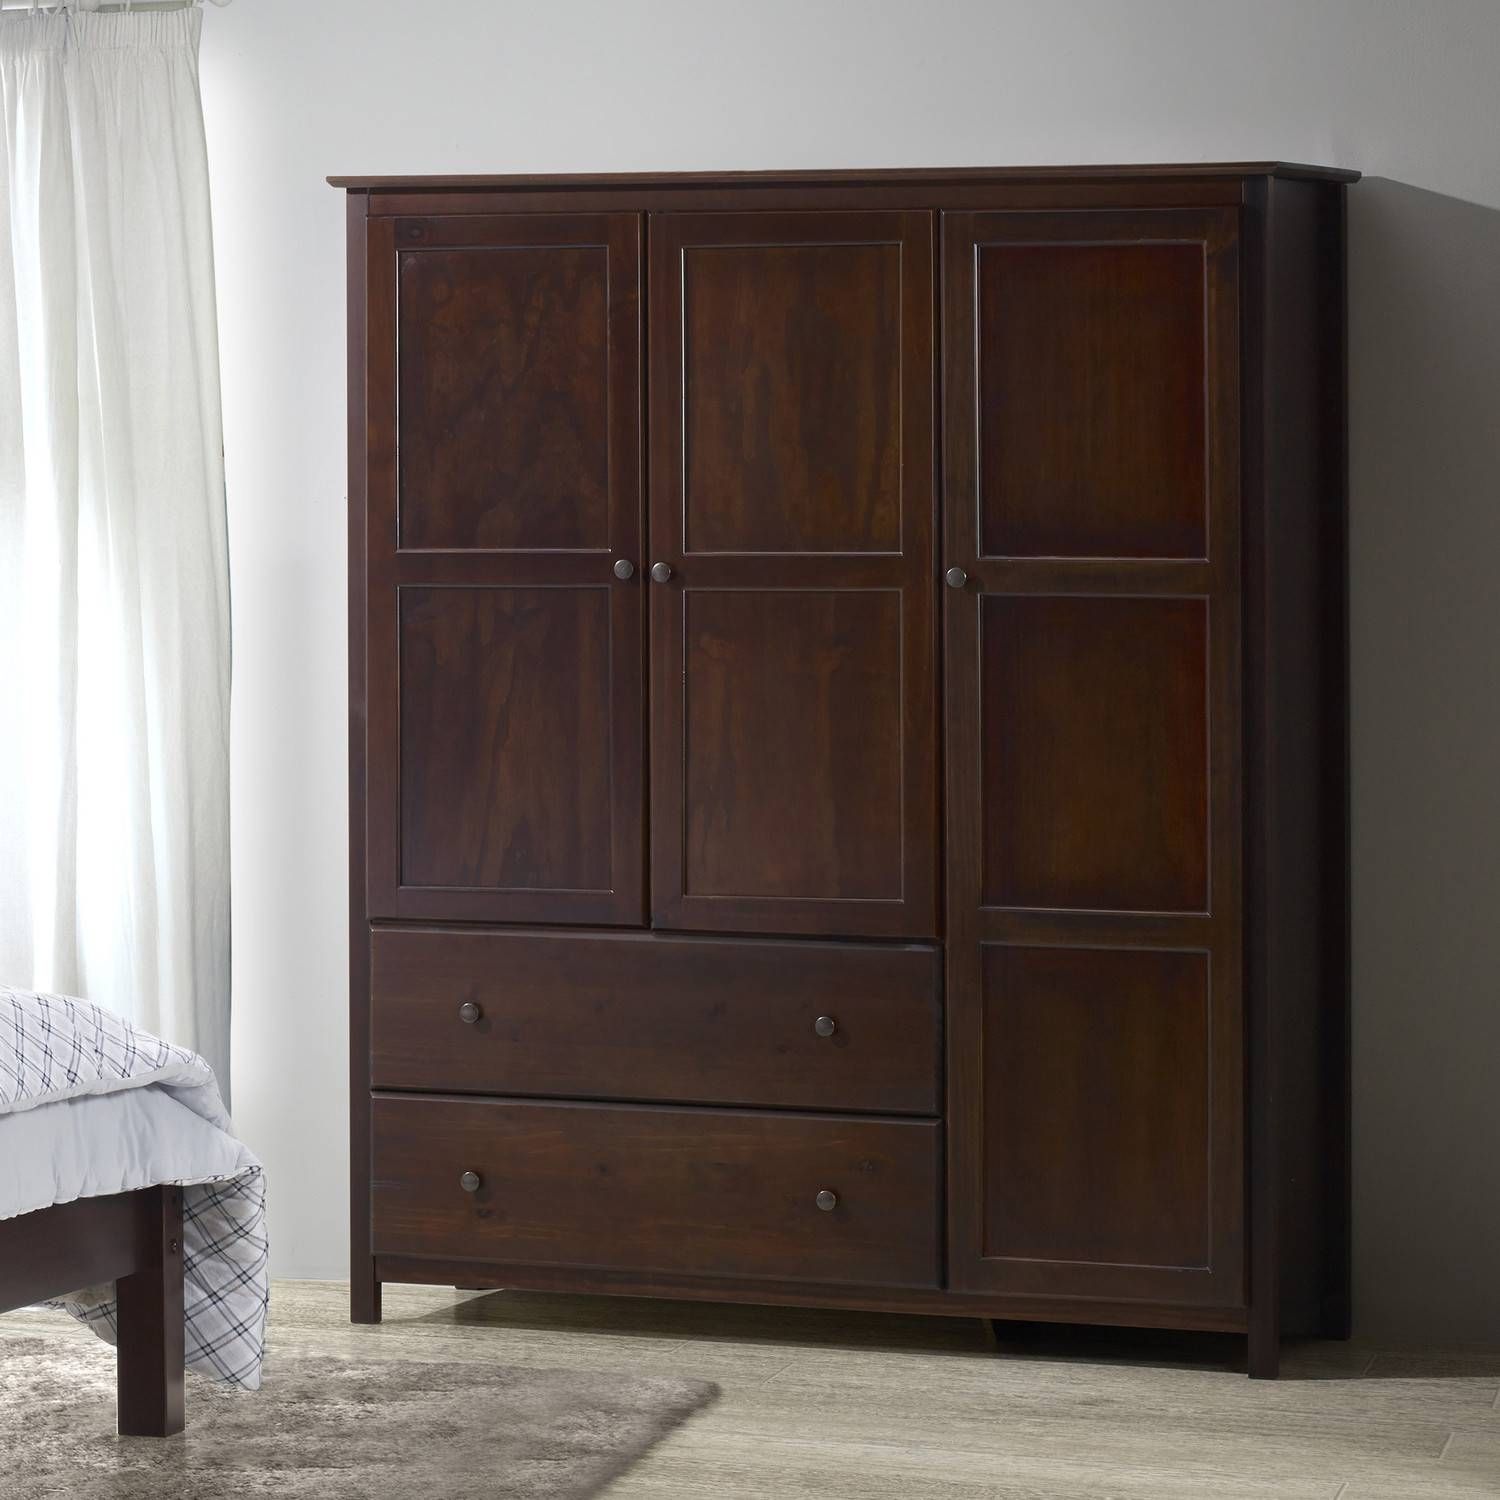 Furniture: Fancy Wardrobe Armoire For Wardrobe Organizer Idea Within Dark Wood Wardrobe Cheap (View 11 of 30)